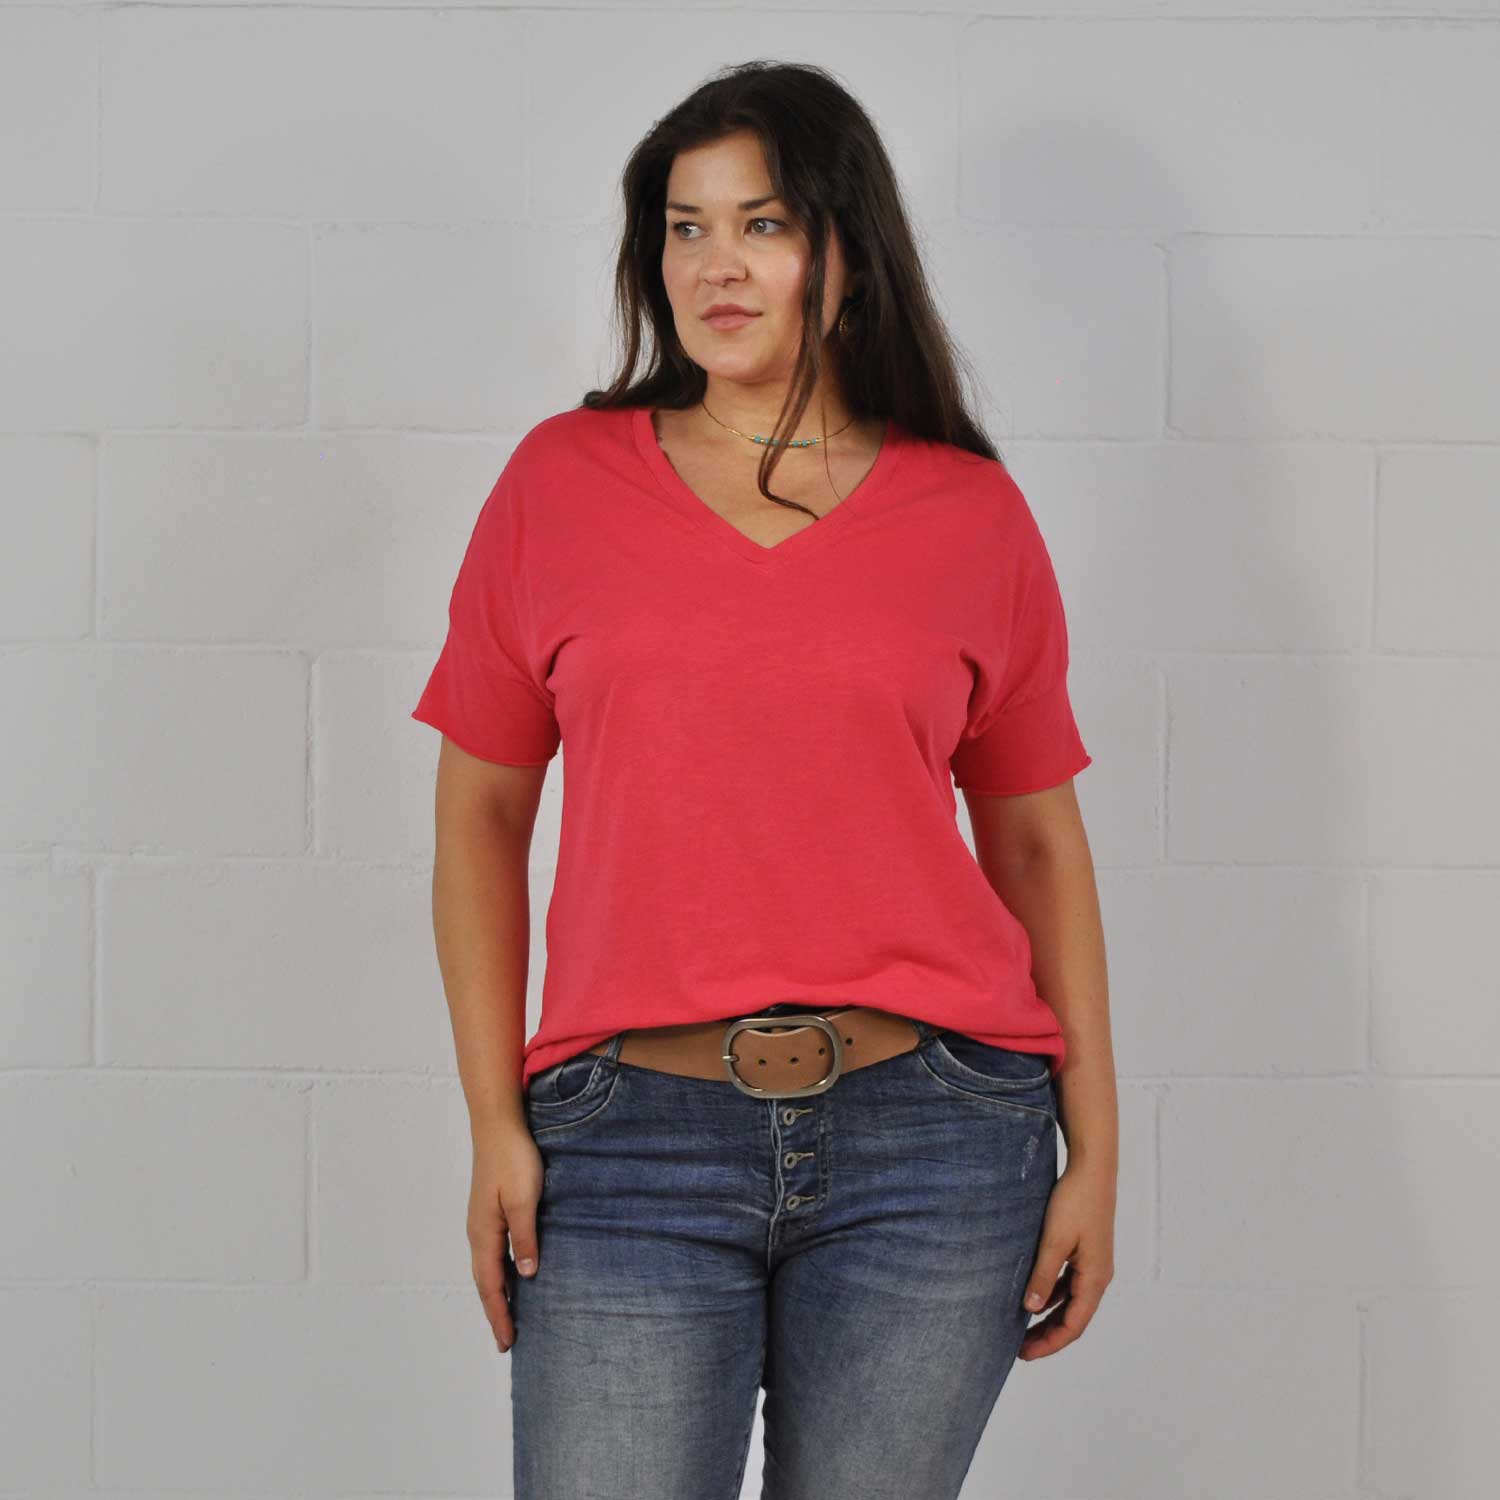 Short sleeve red t -shirt